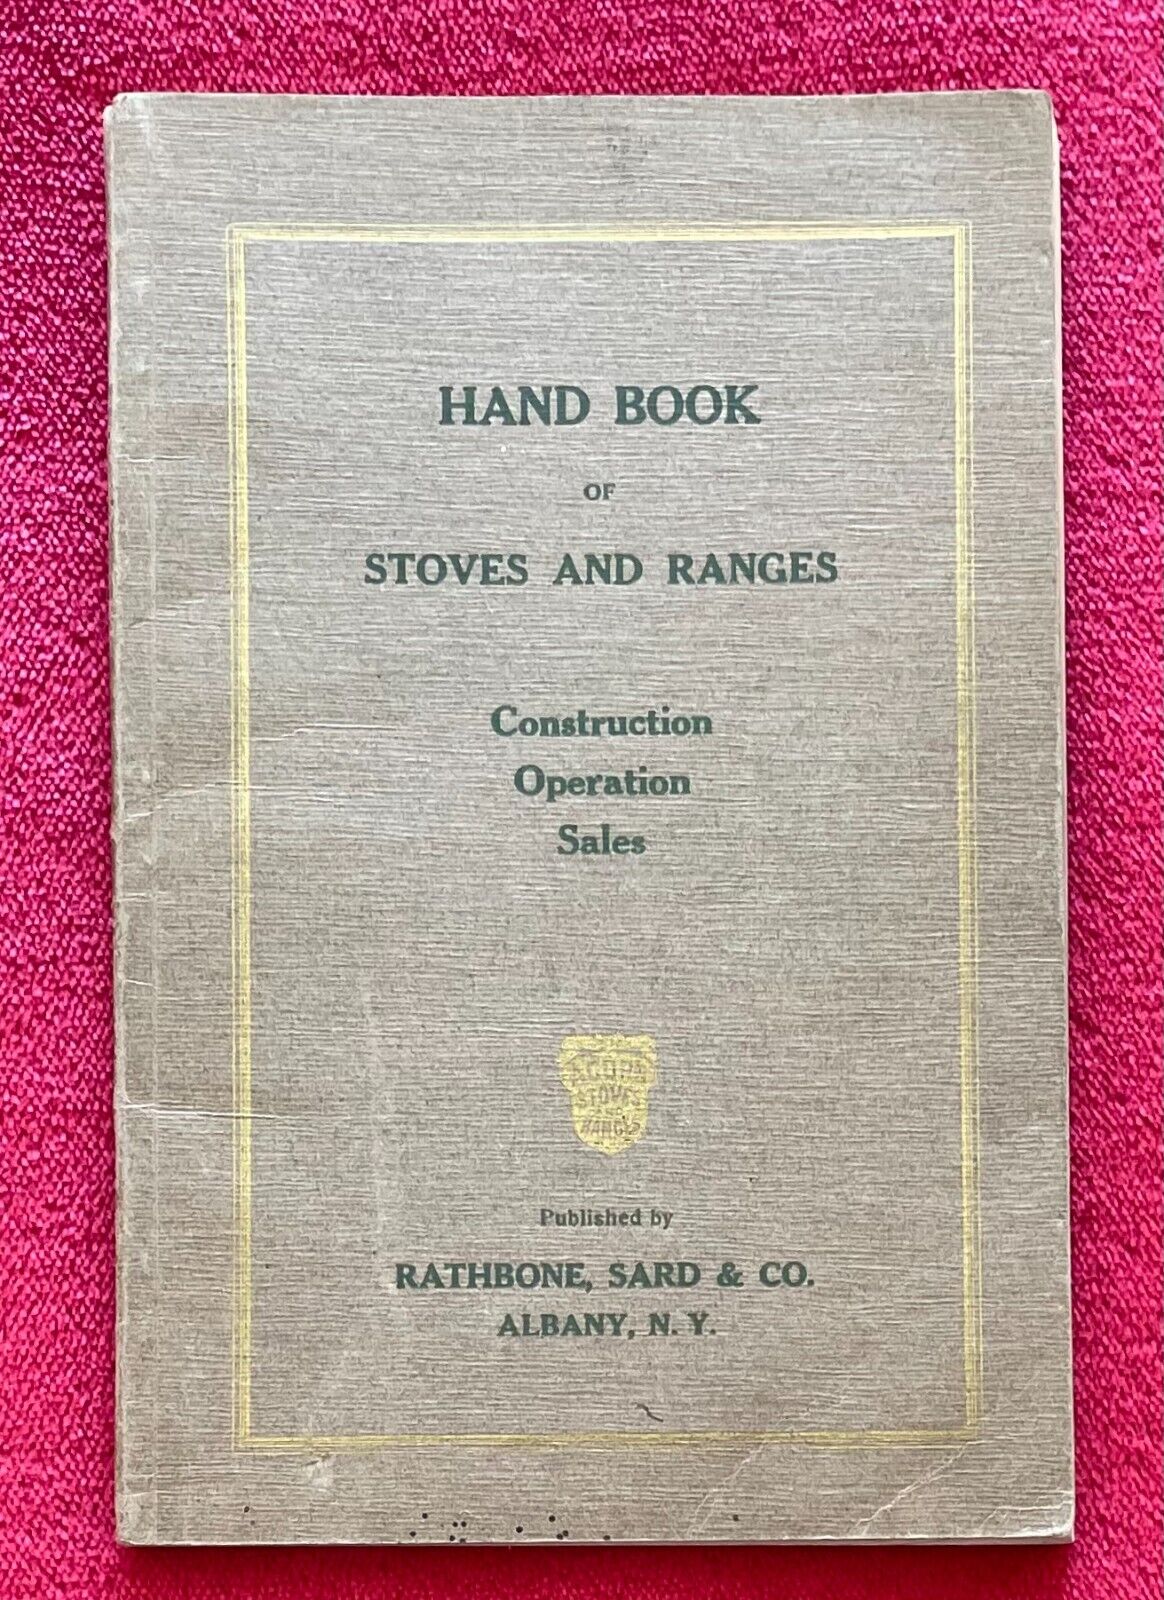 1915 HANDBOOK OF ACORN STOVES & RANGES RATHBONE, SARD & CO. - ILLUSTRATED